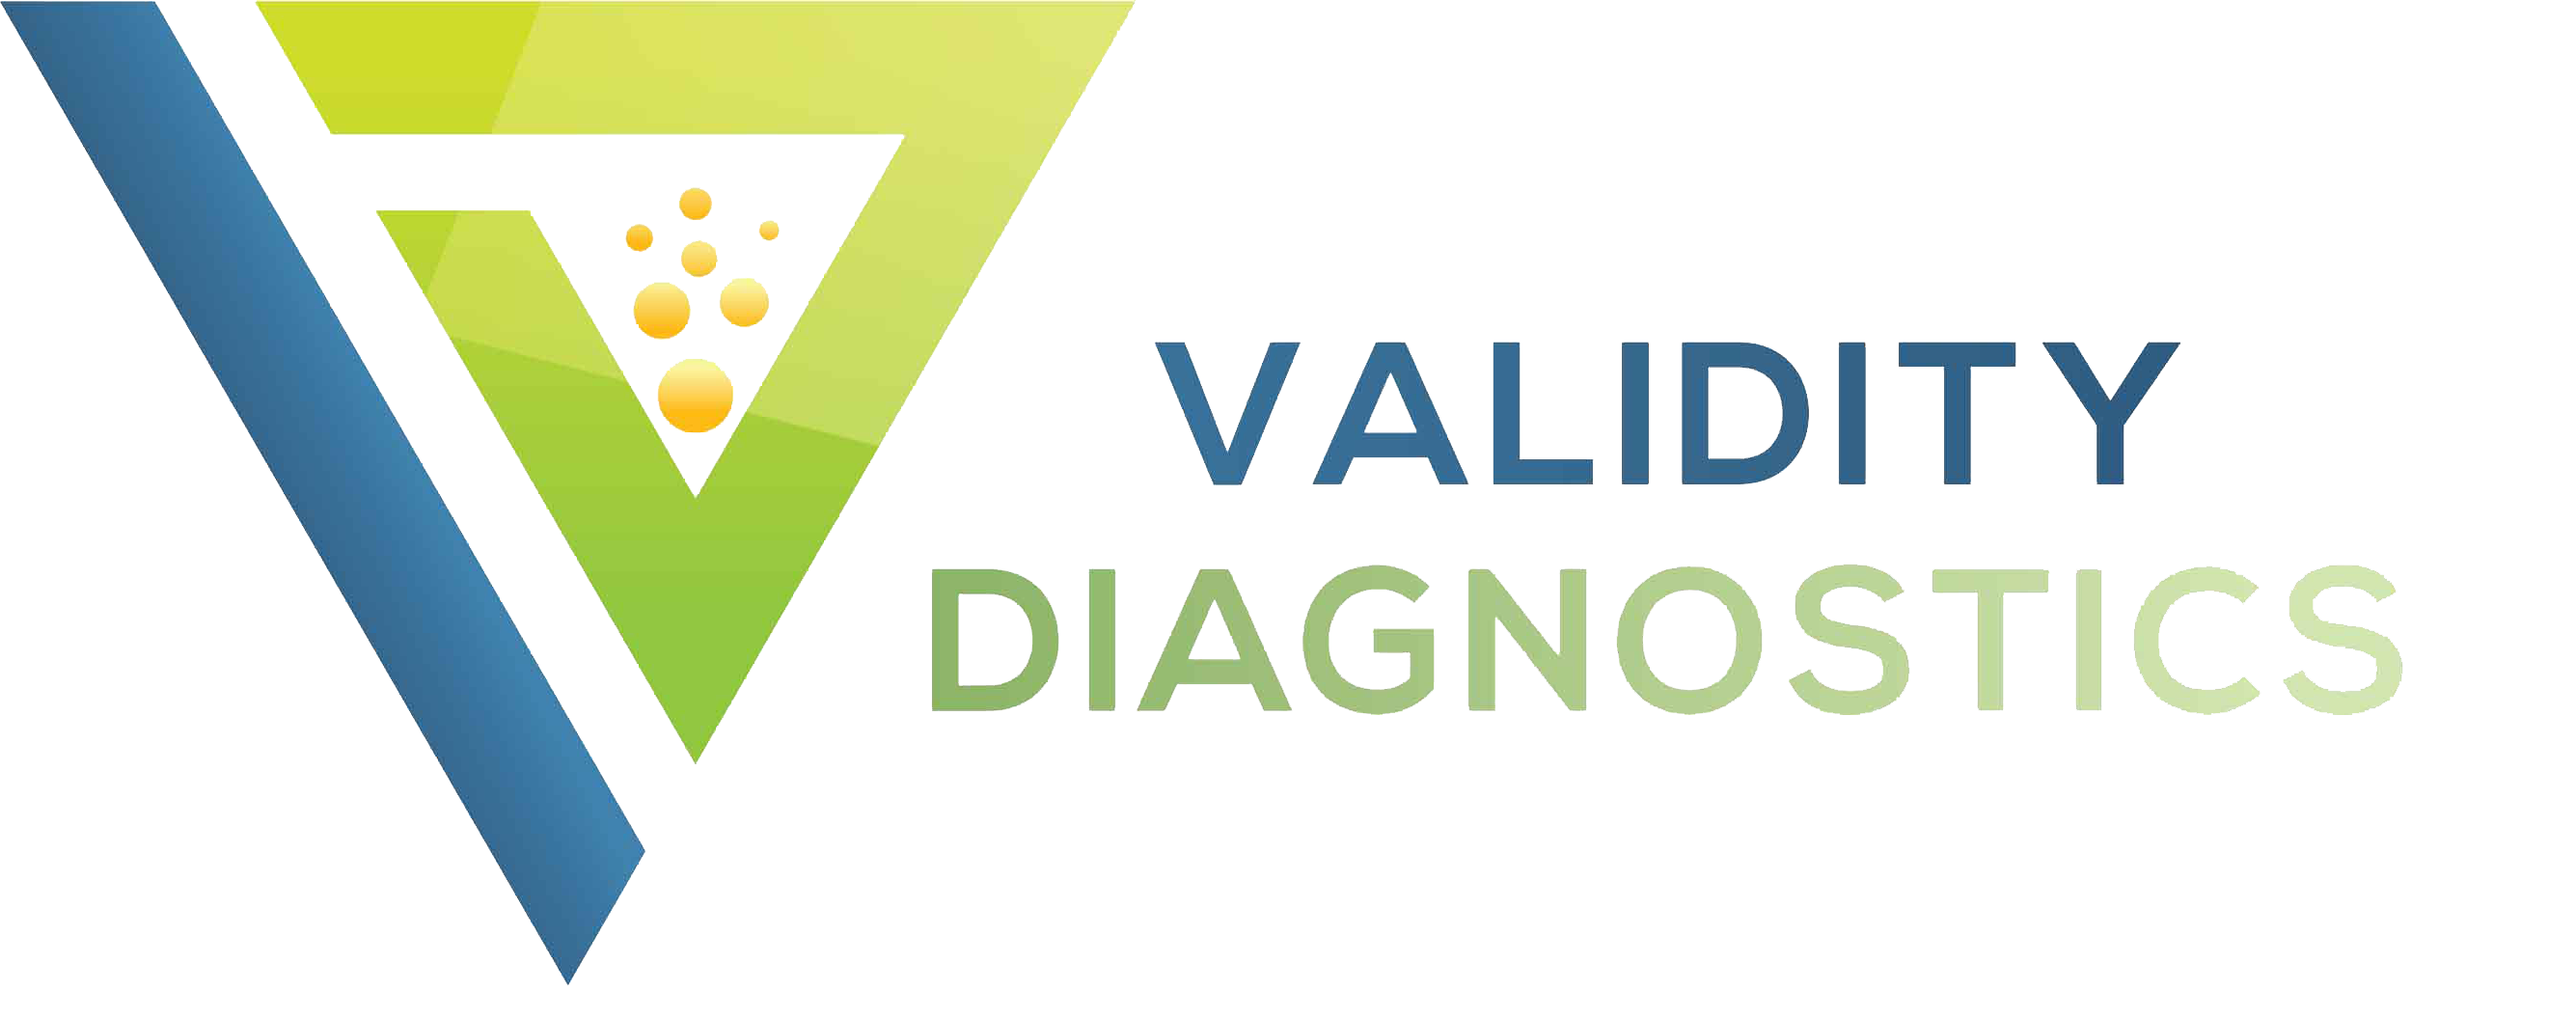 Validity Diagnostics